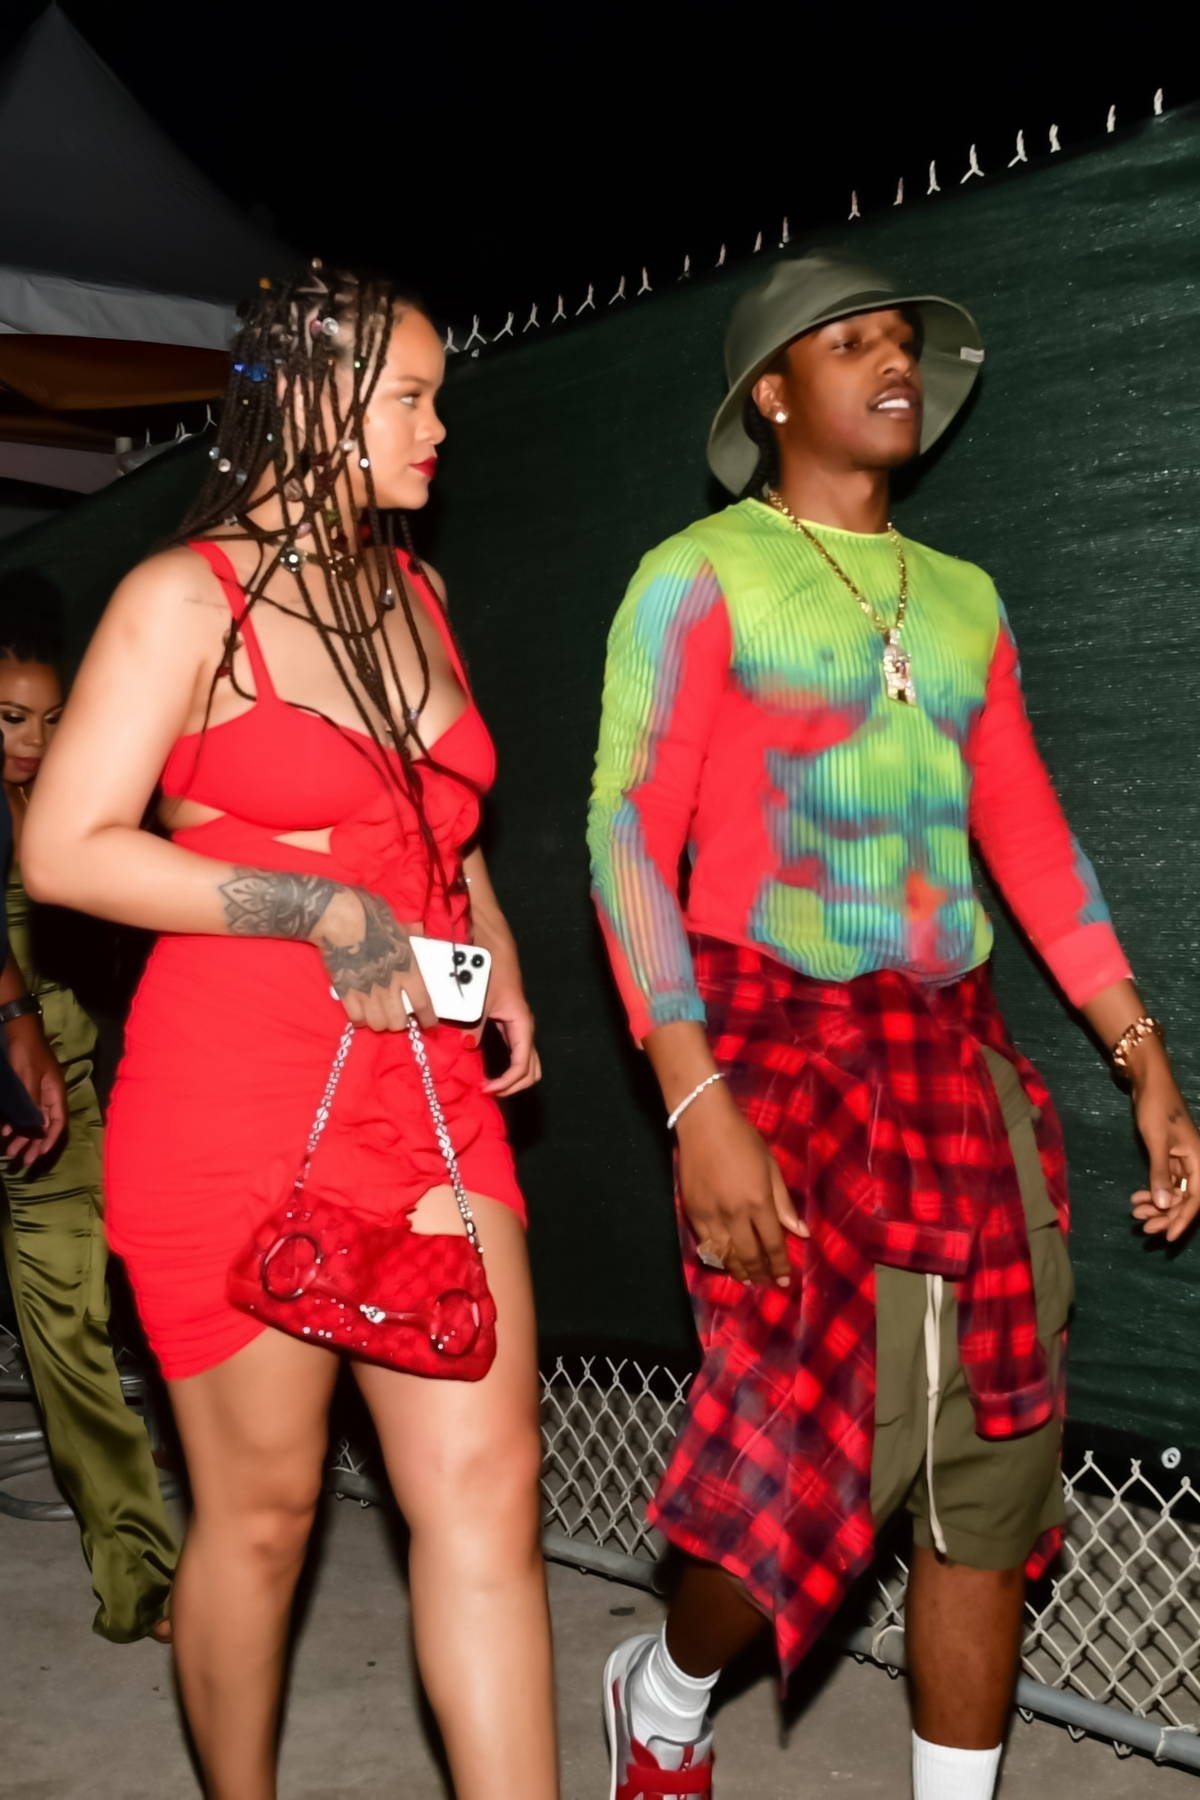 Rihanna & A$AP Rocky Display PDA At Barbados Music Festival